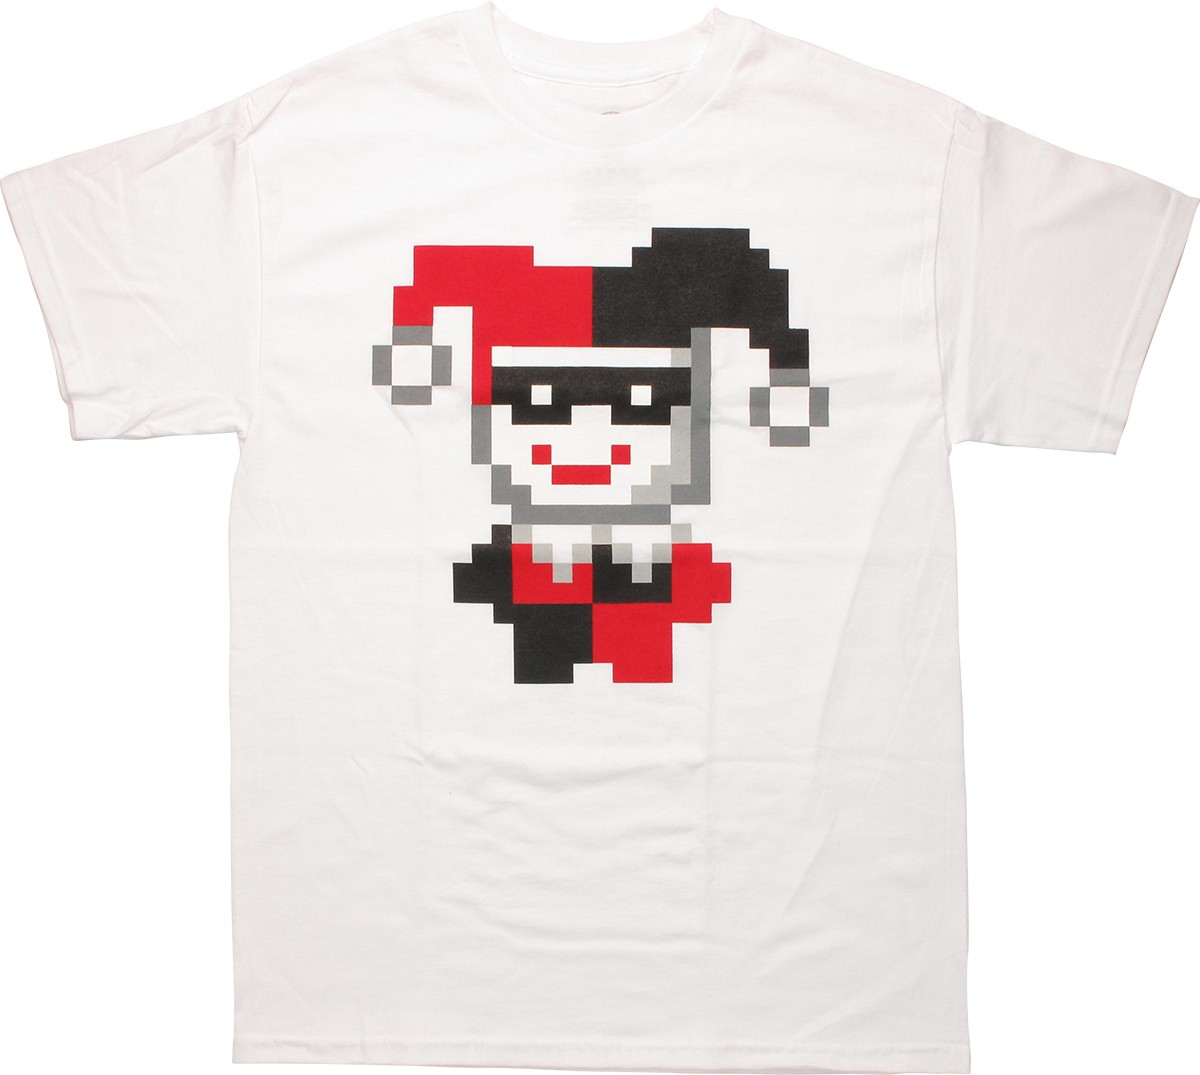 Harley Quinn Big Pixel T-Shirt - image 1 of 1